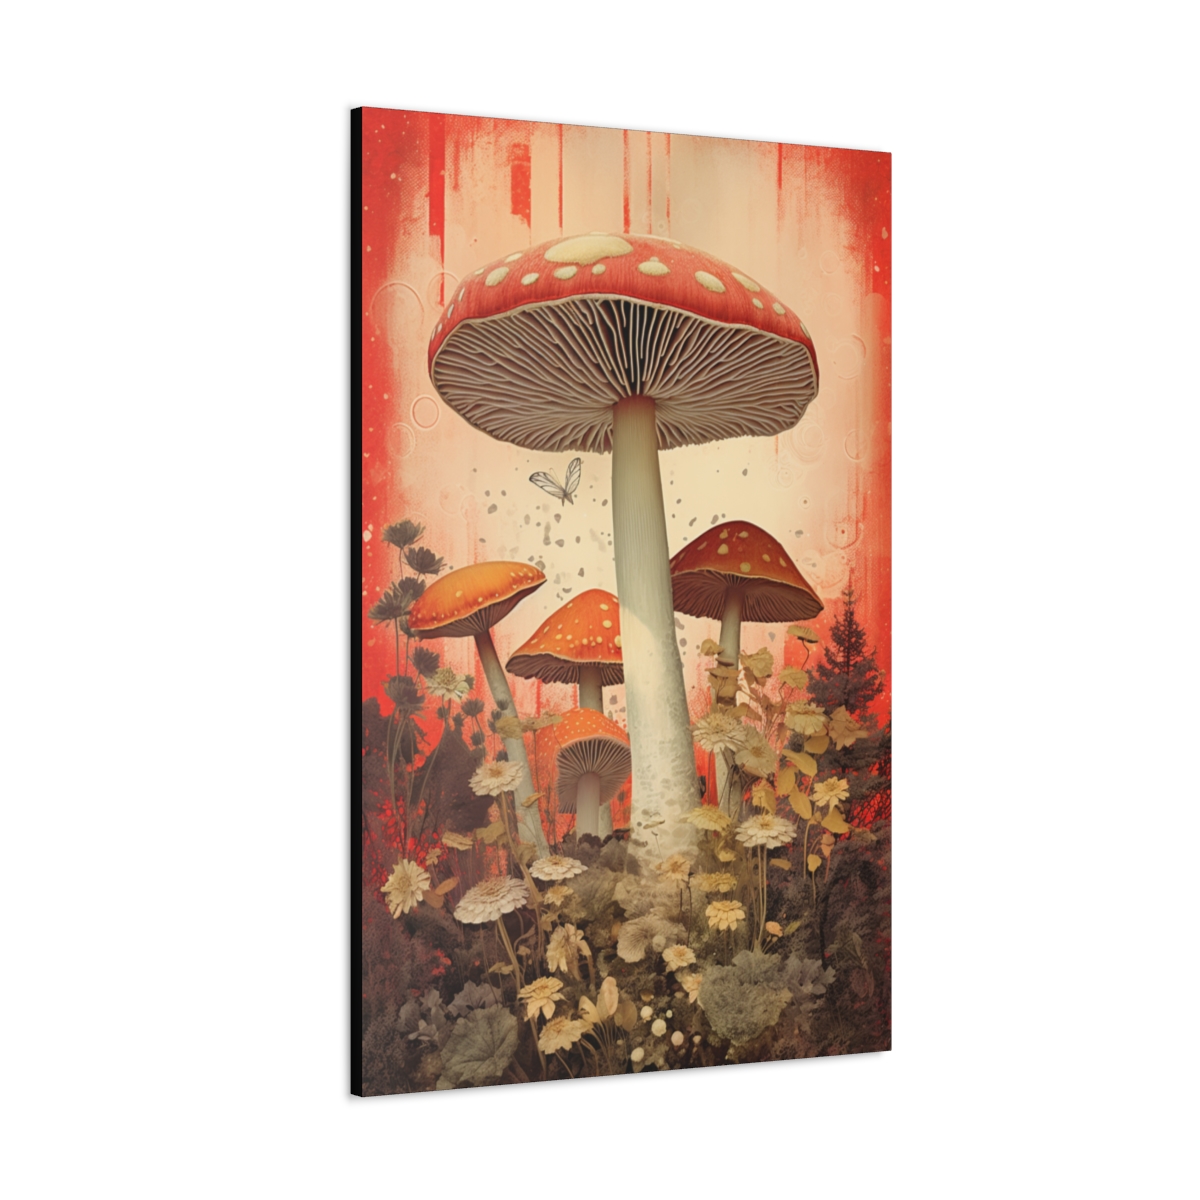 Mushroom Wall Art Canvas Print: Ethereal Shrooms